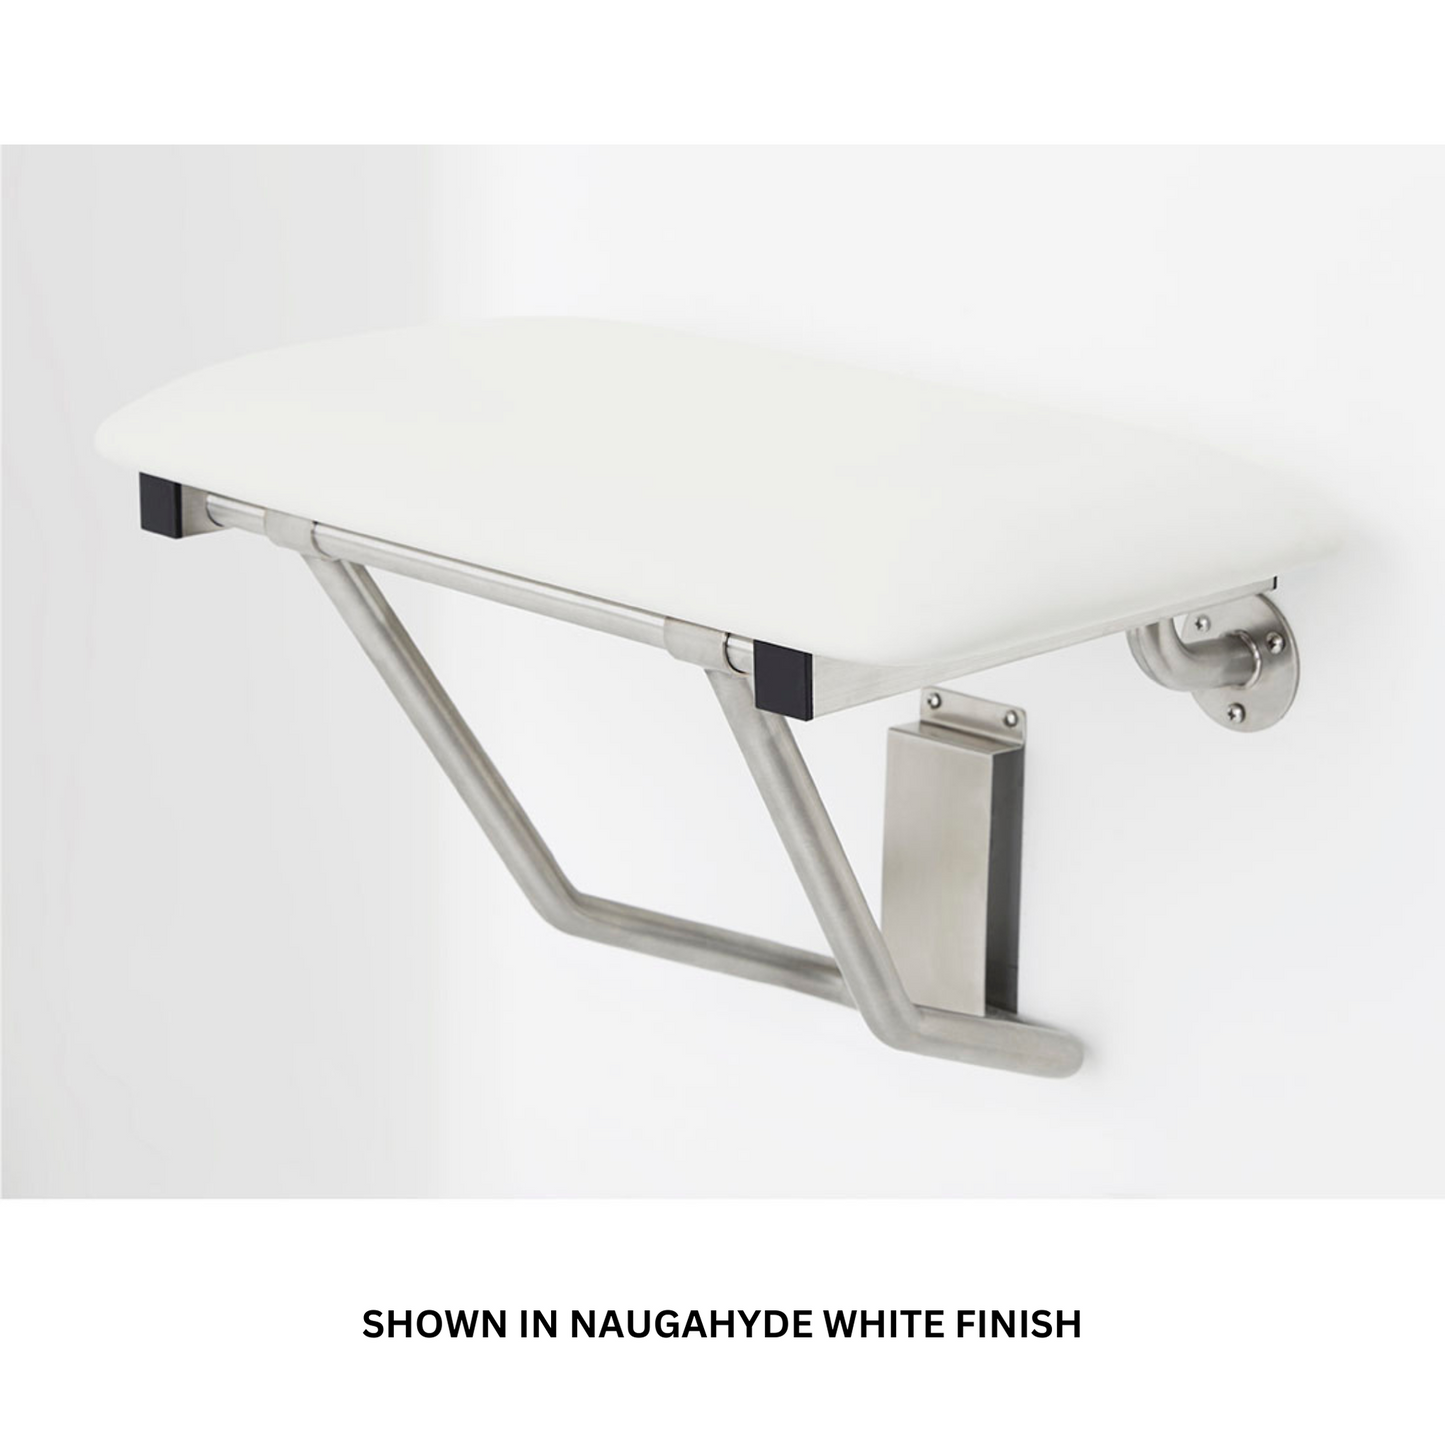 Seachrome Signature Series 22" W x 15" D Naugahyde Almond Cushion Seat Top Folding Wall Mount Bench Shower Seat